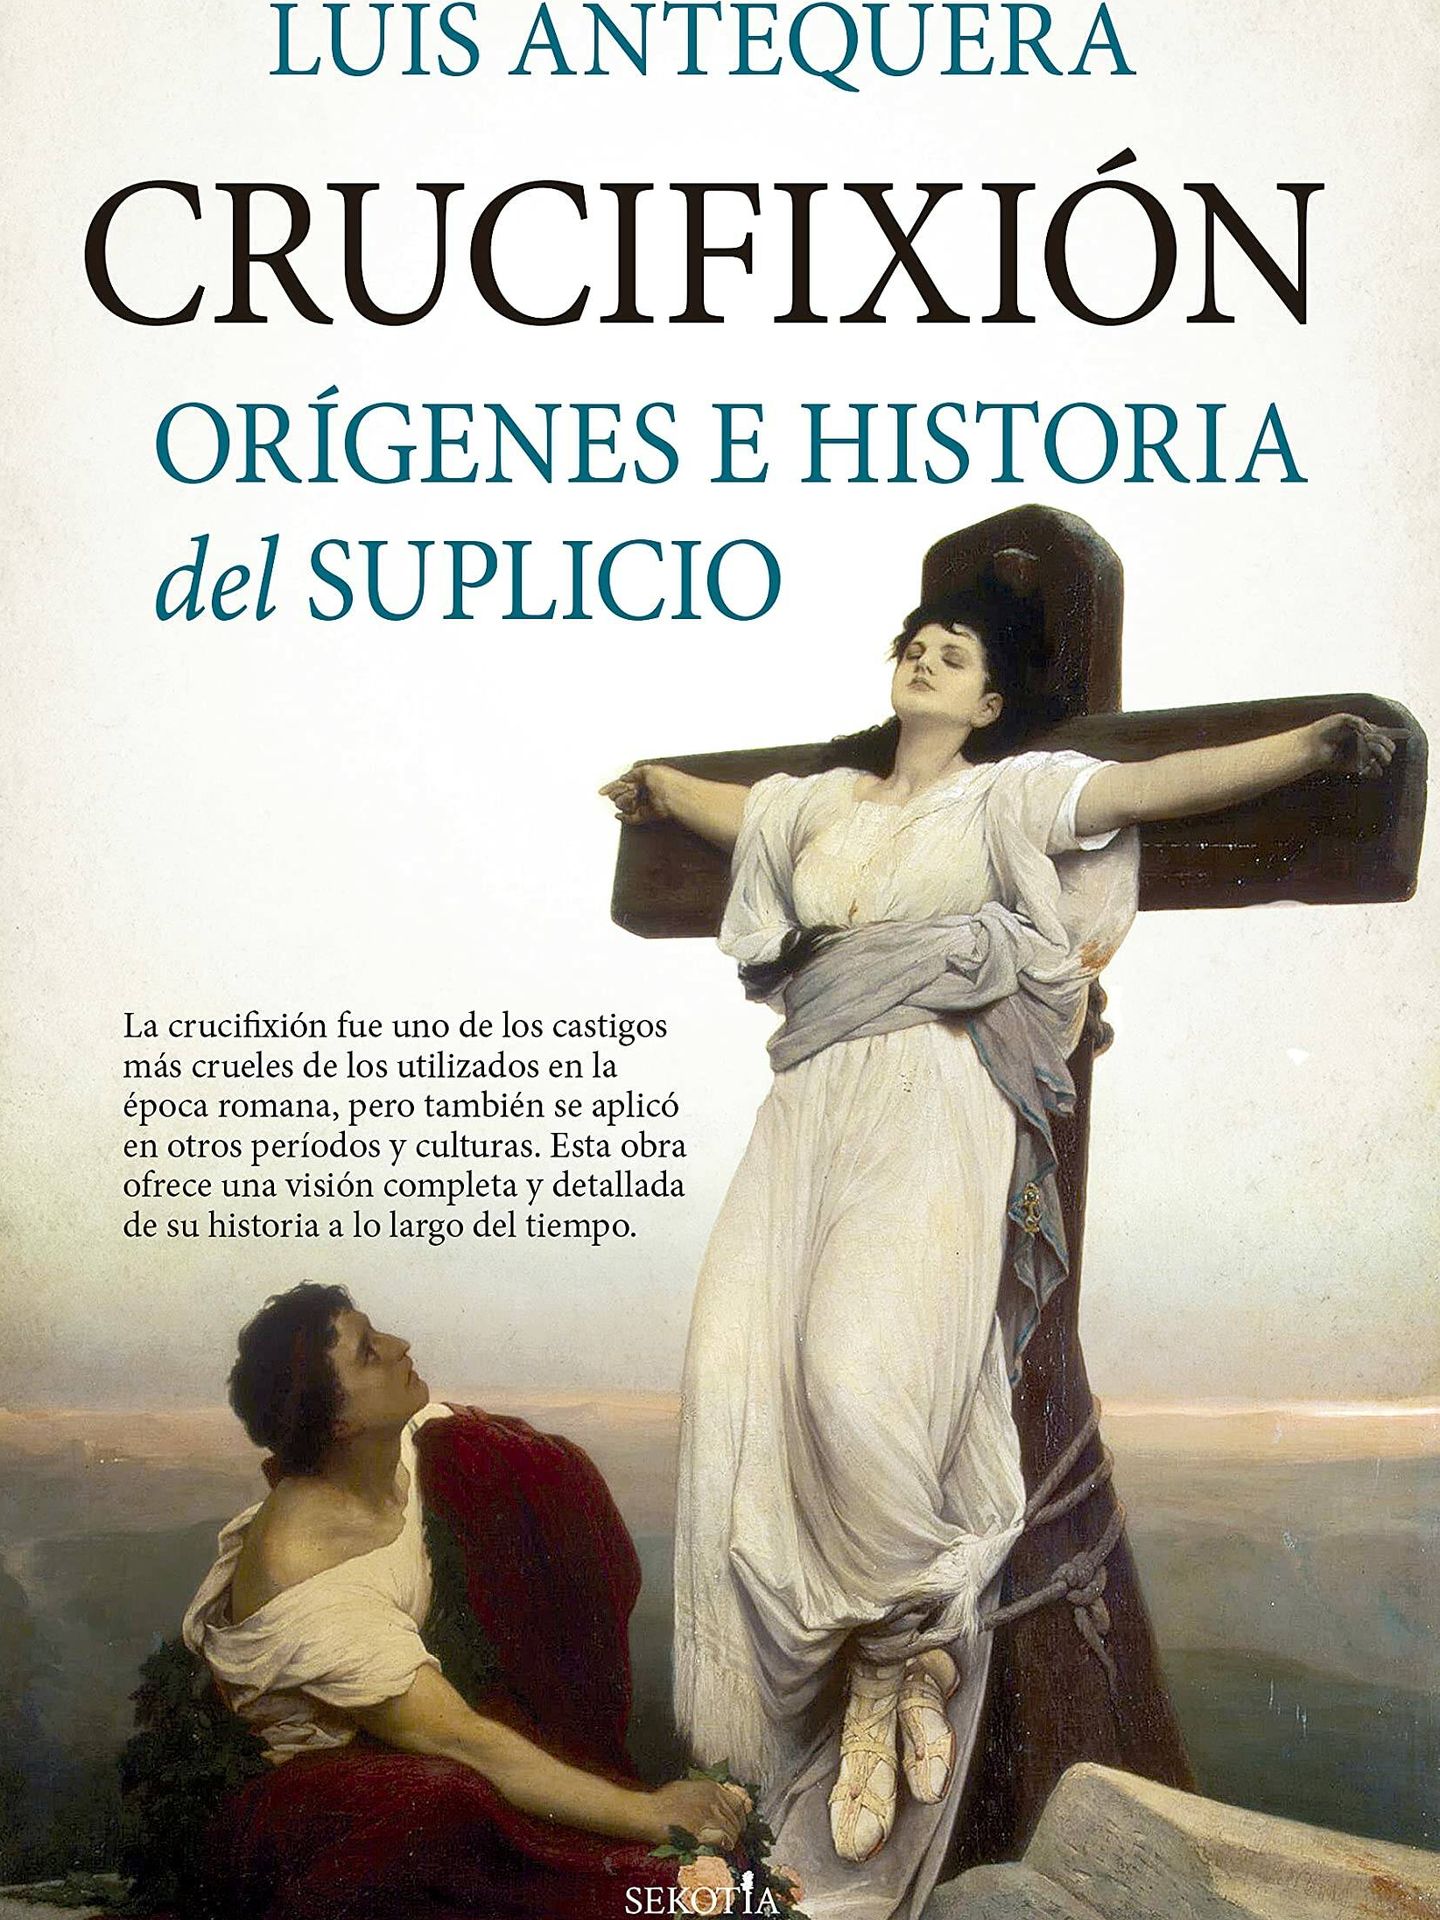 Portada del libro de Luis Antequera 'Crucifixión'.